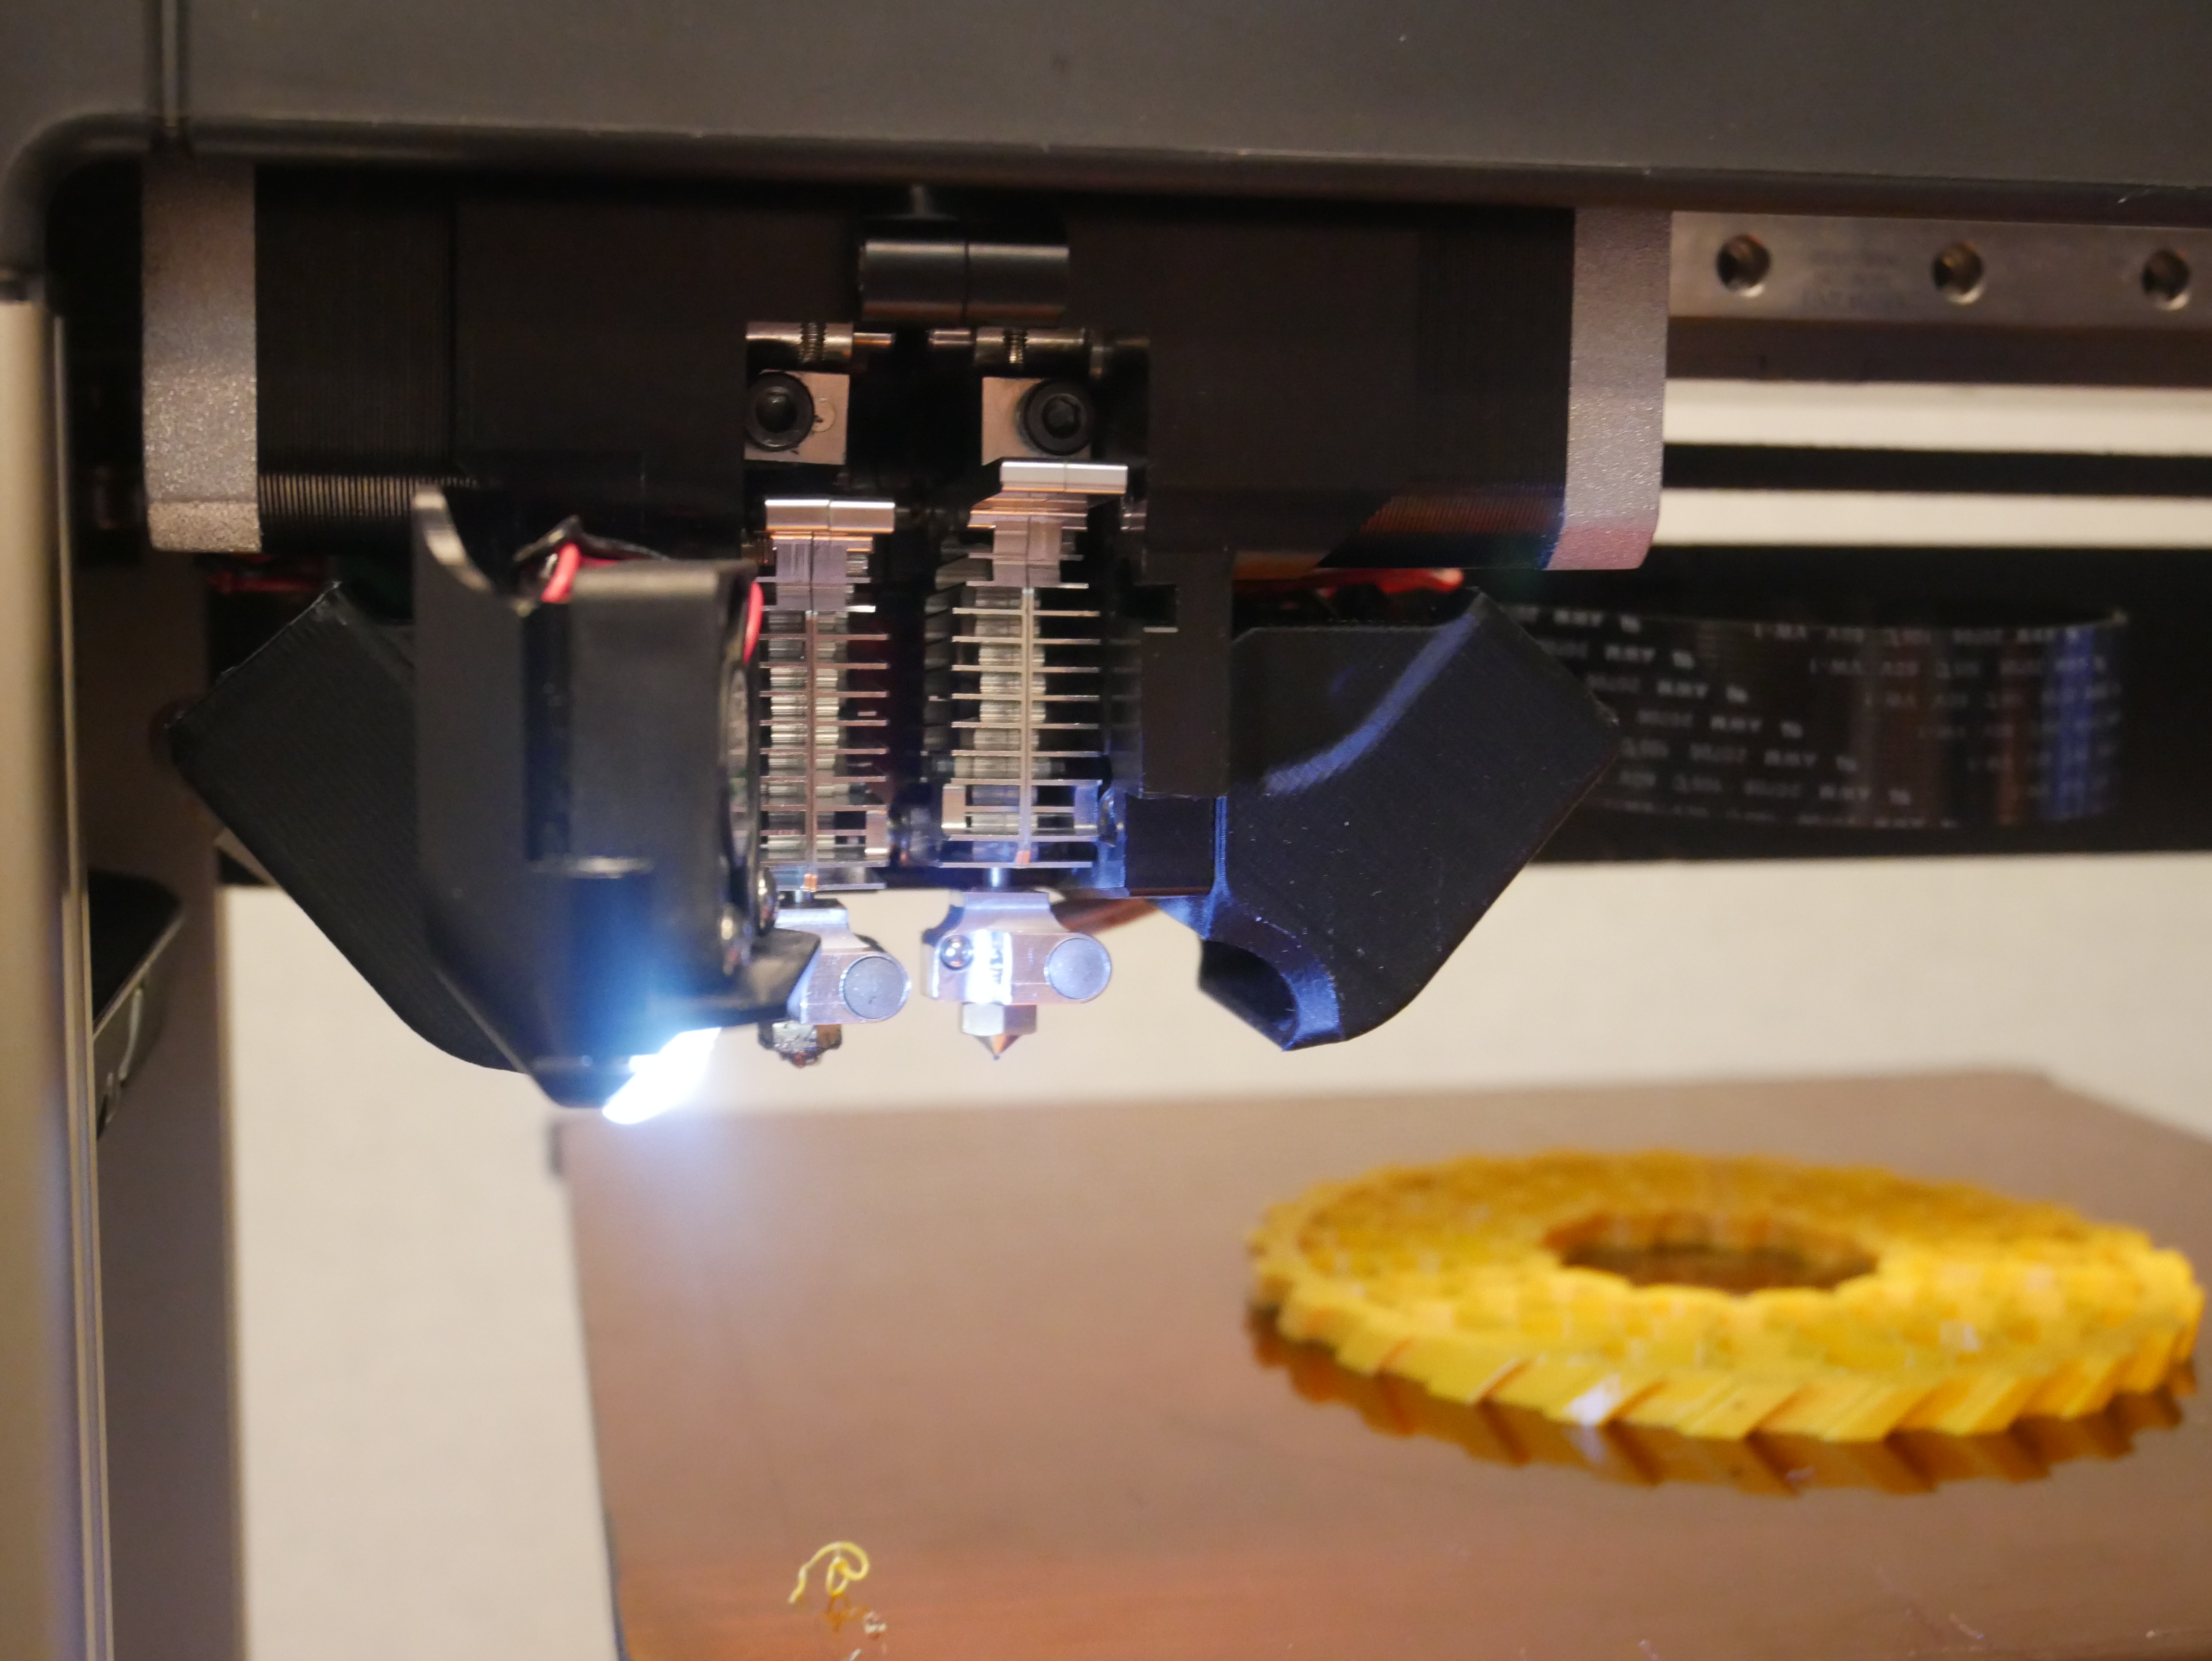 The Intelligent dual extruders integrated into FELIX 3D printers. Photo by Tia Vialva.